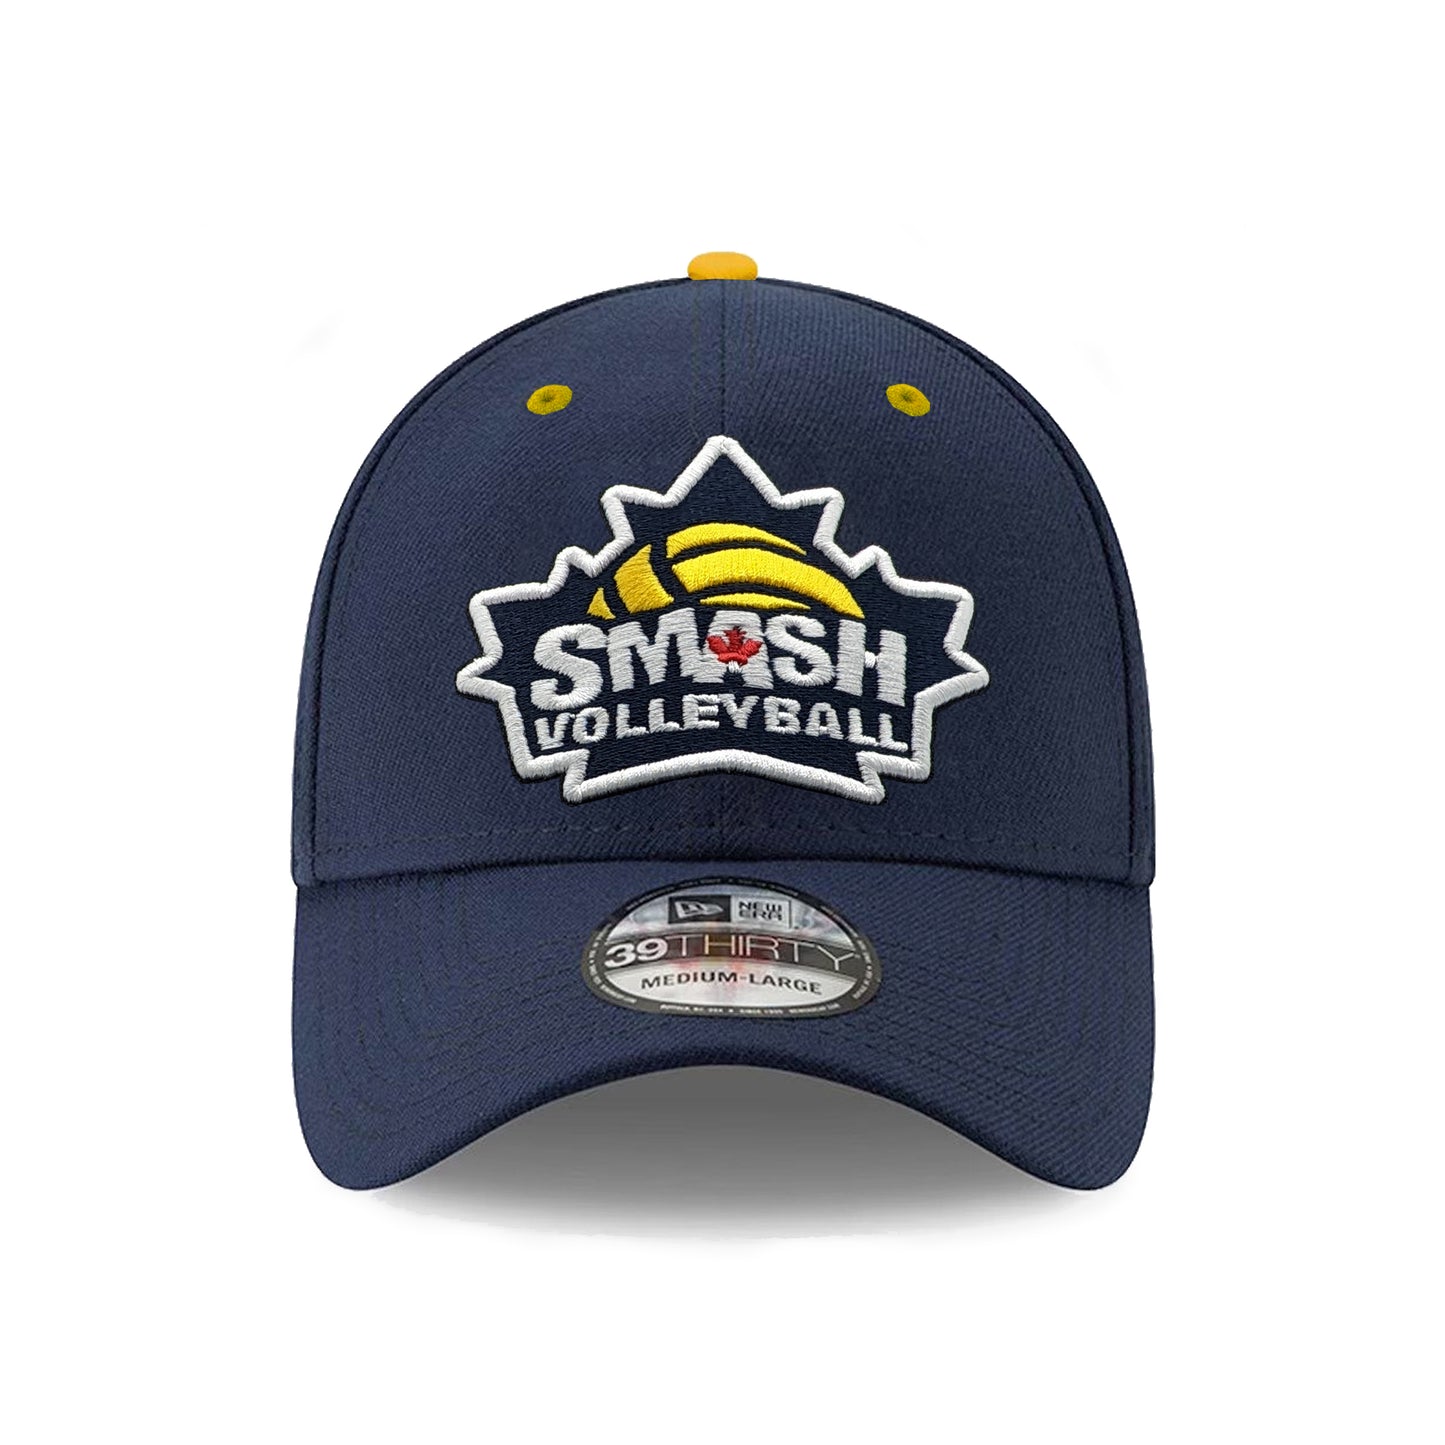 New Era 39Thirty Stretch Fit Baseball Hat - Navy & Yellow